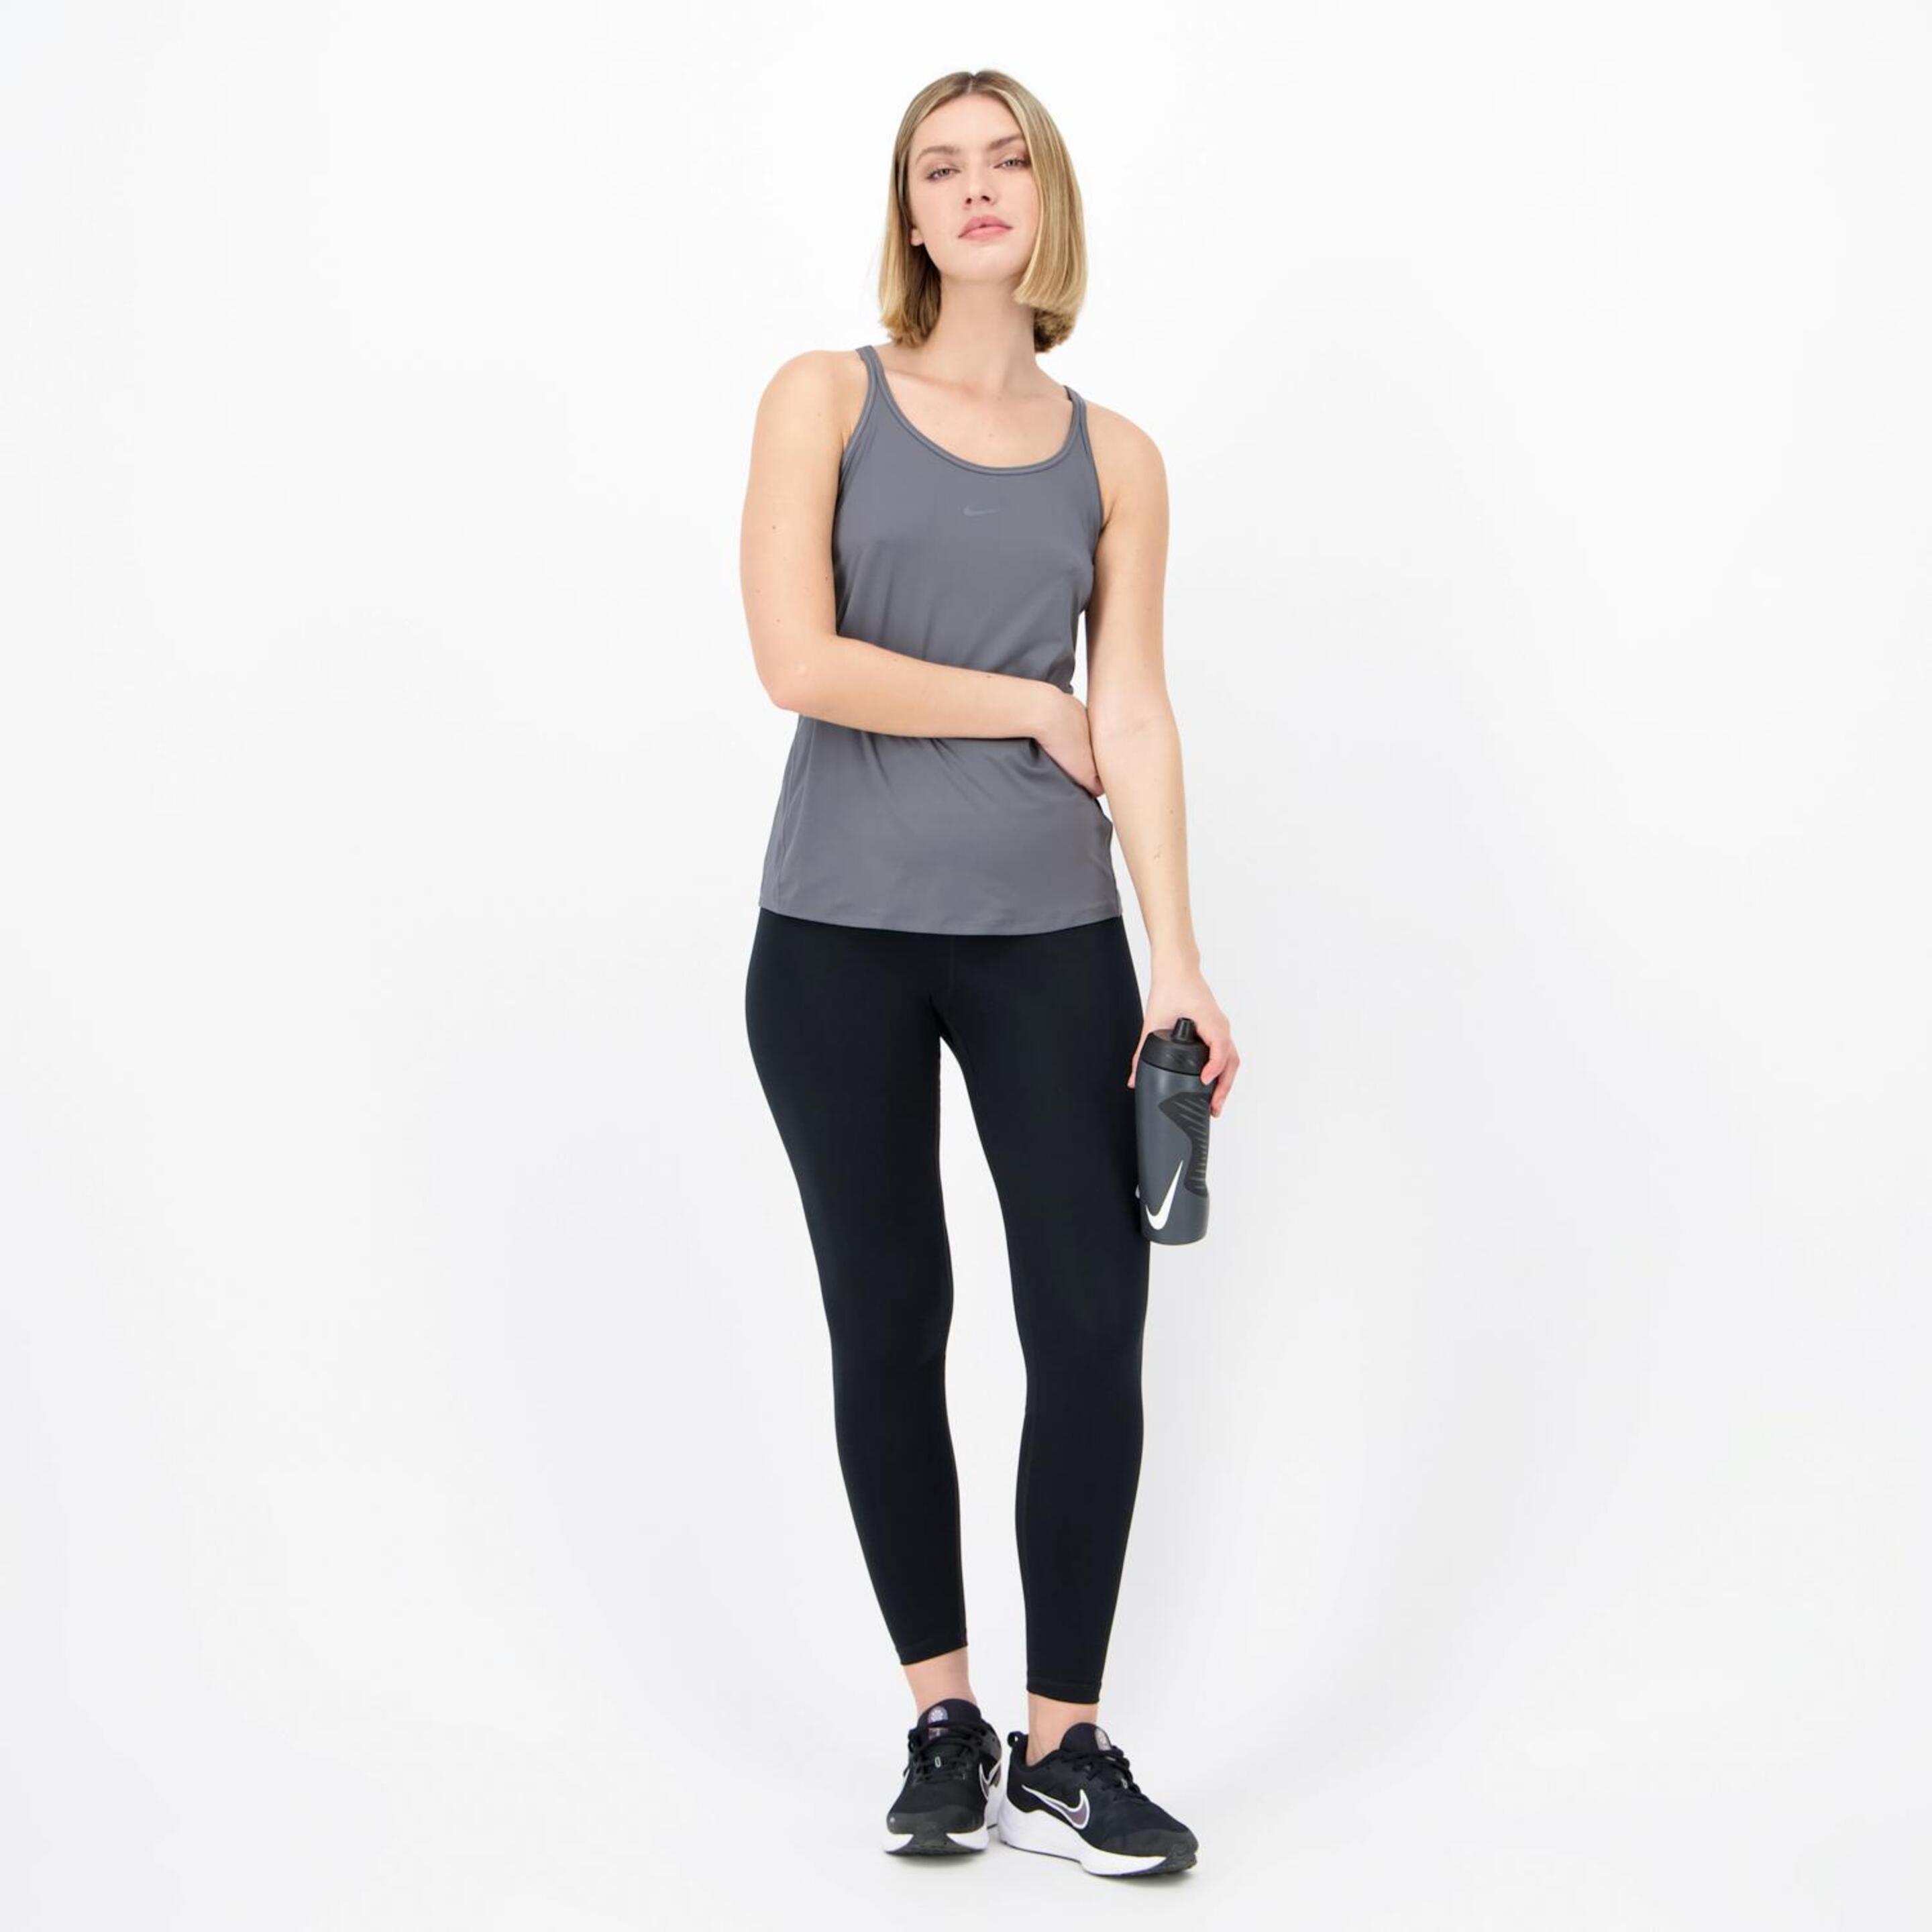 Nike One - Gris - Camiseta Tirantes Mujer